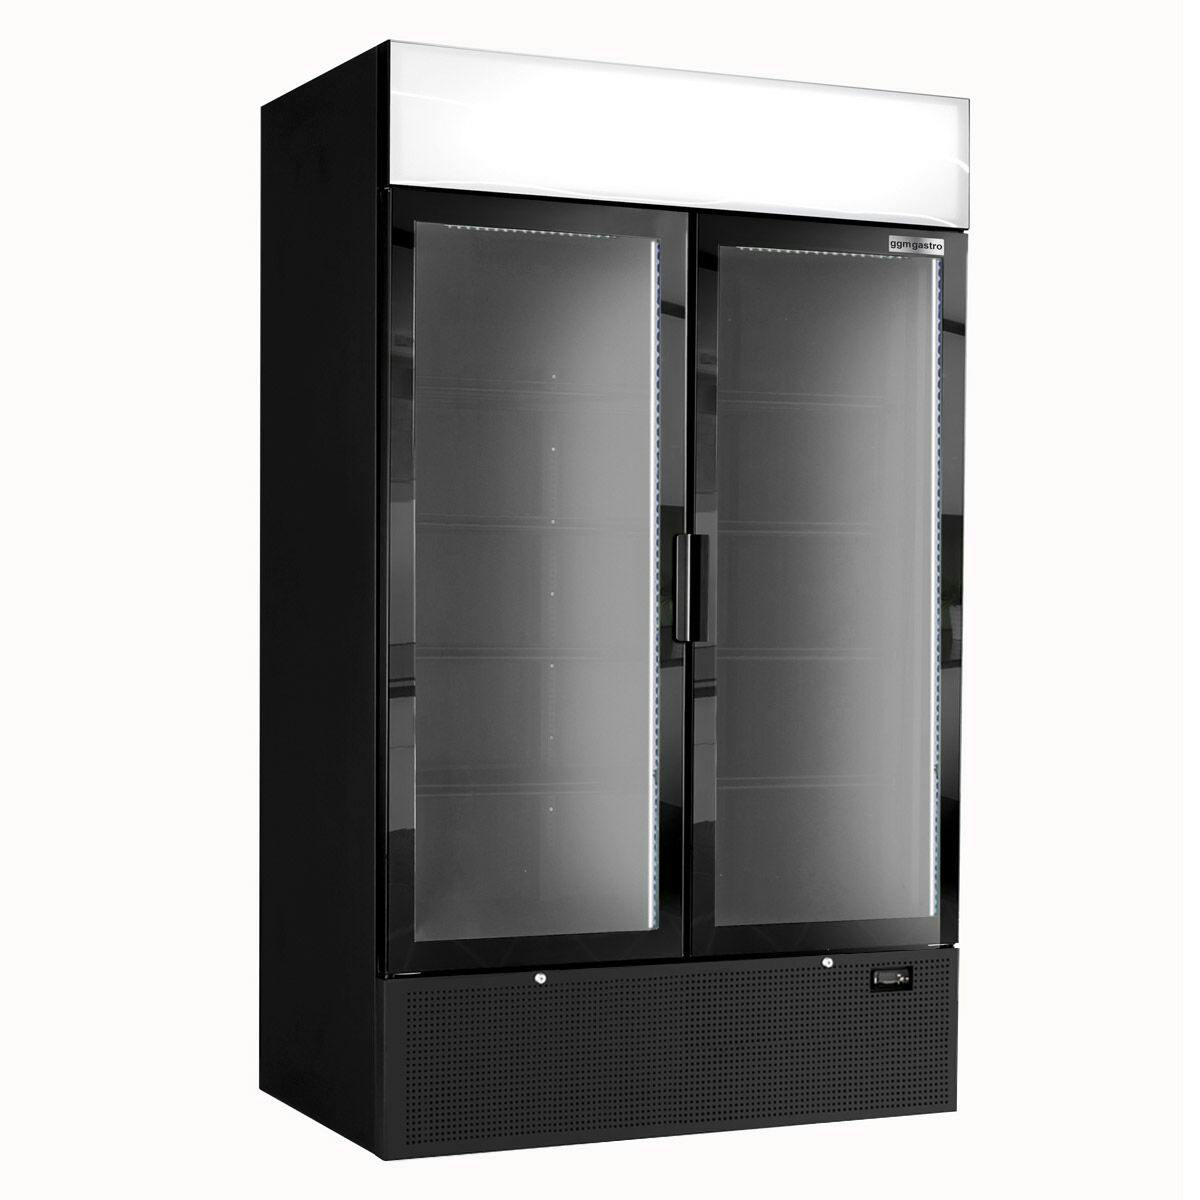 (3 pieces) Beverage refrigerator - 3144 litres (total) - black